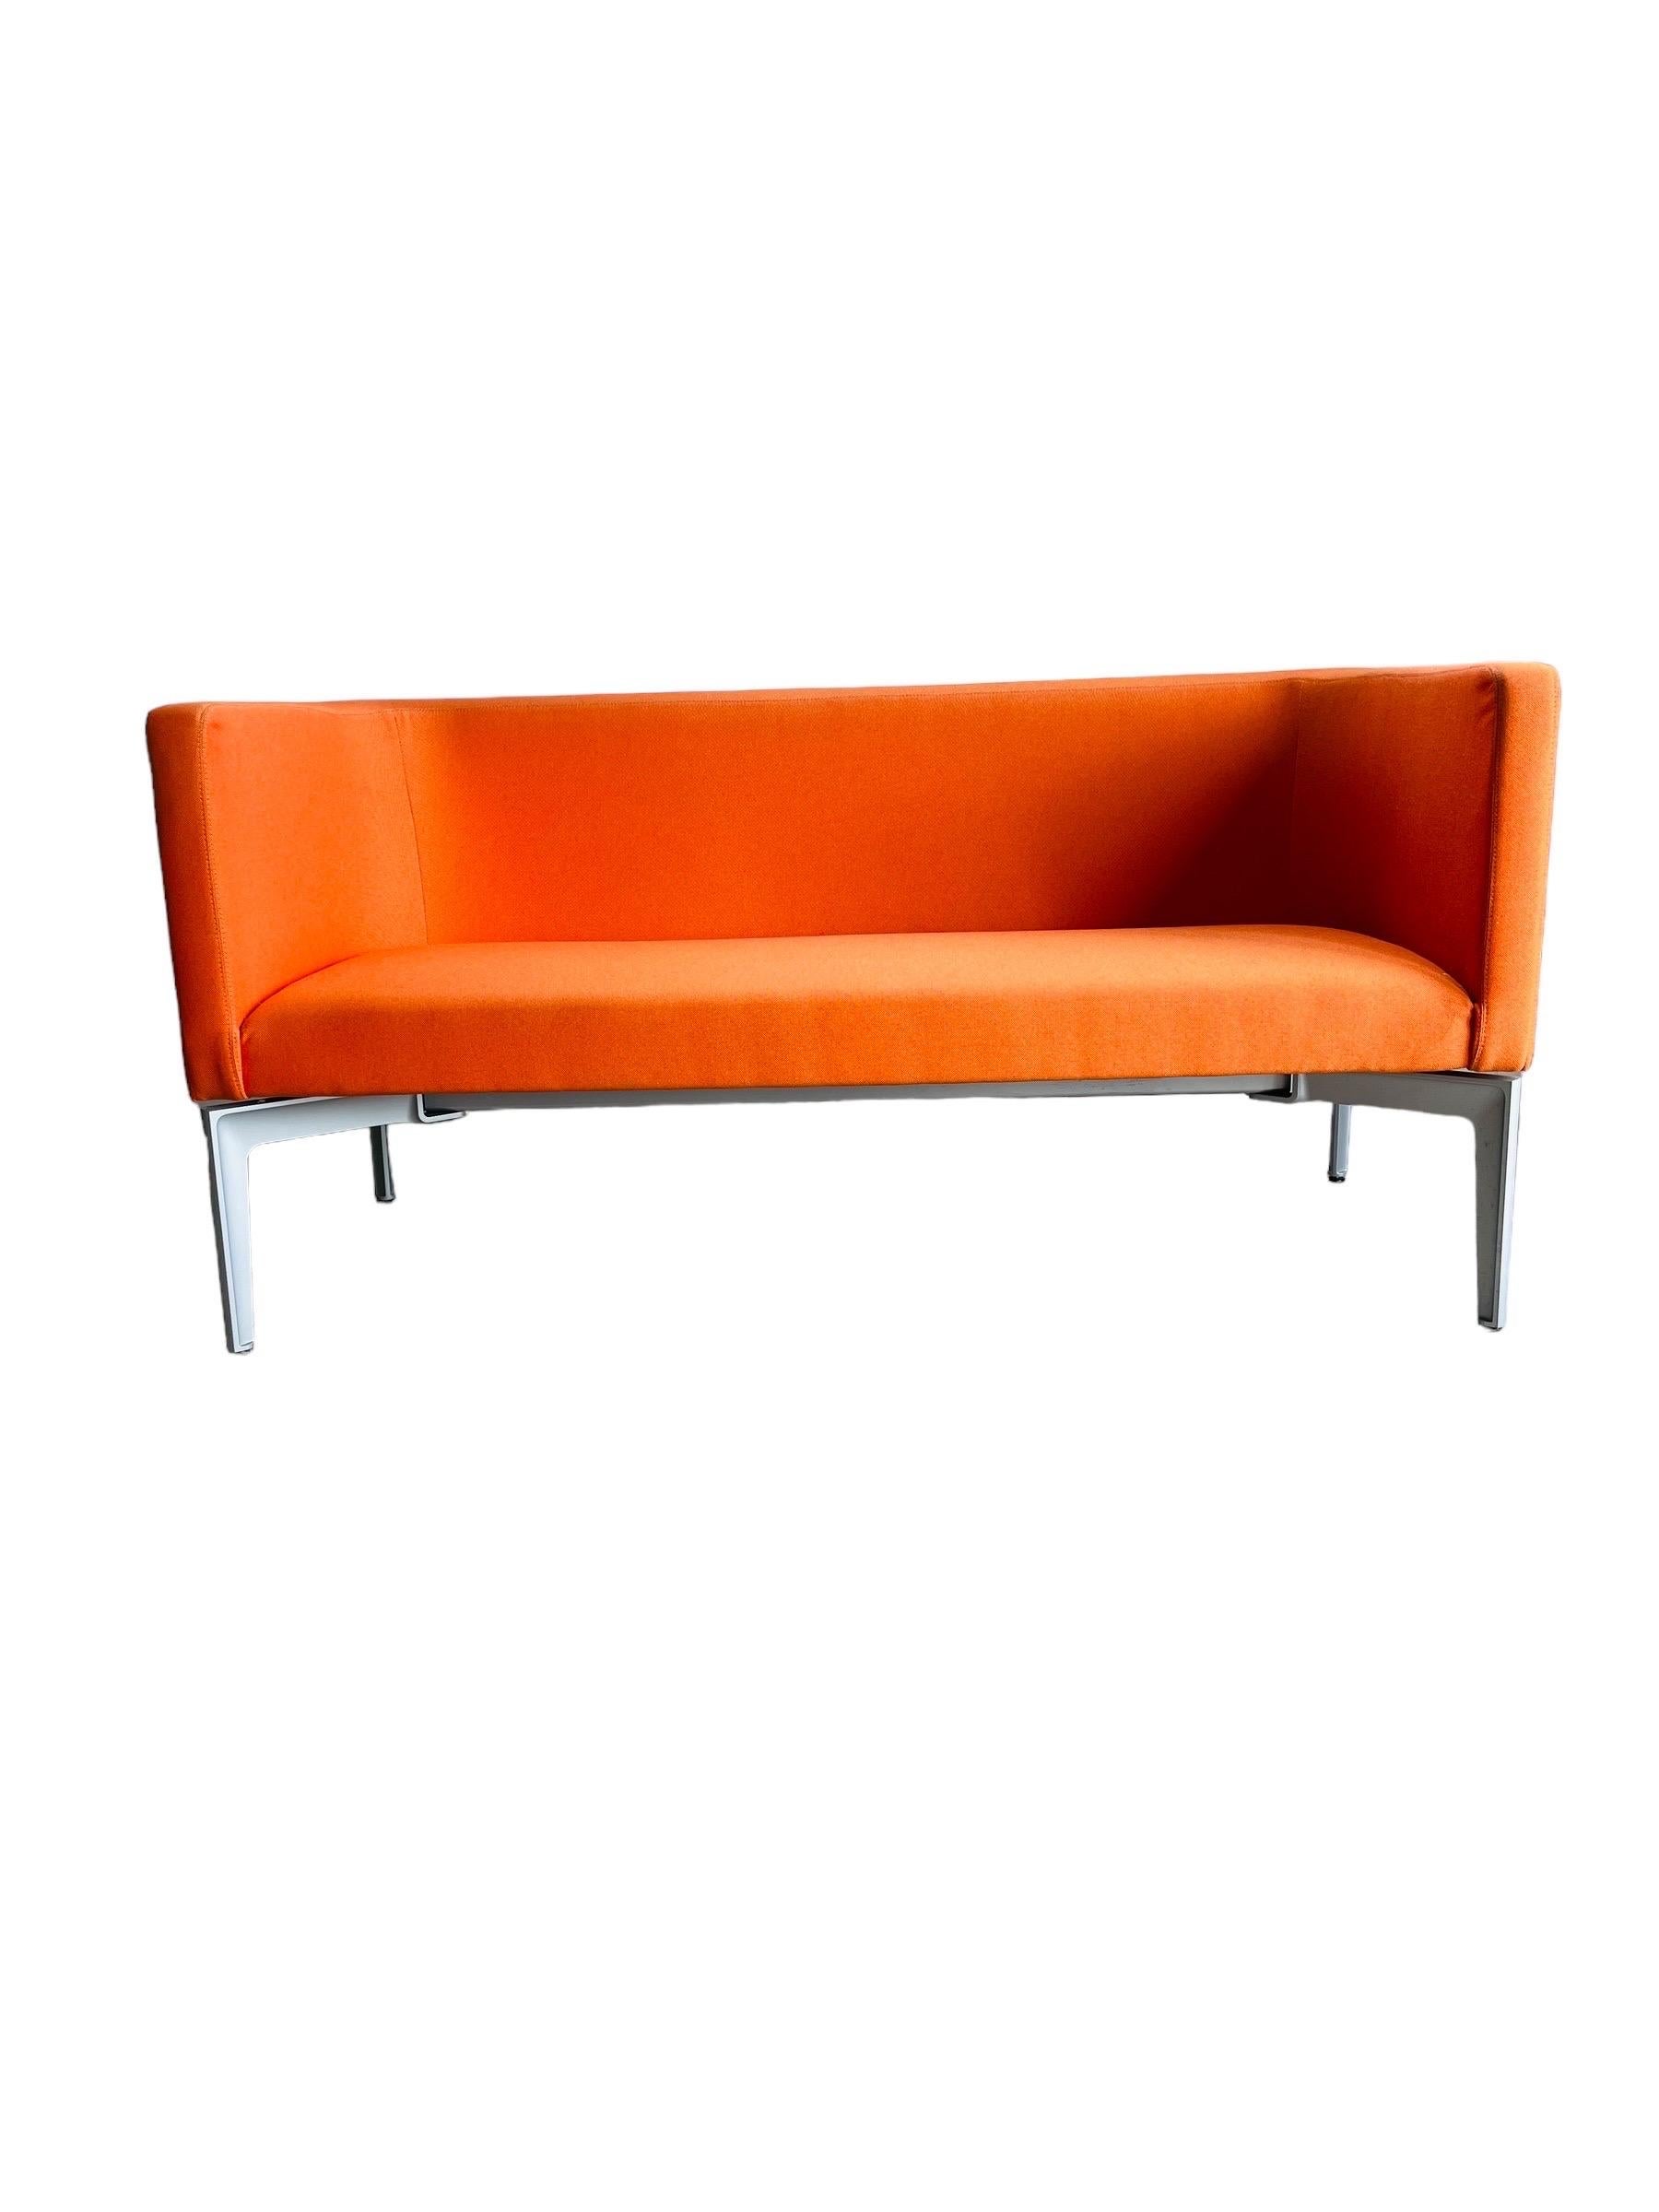 Steelcase Bivi Rumble Seat Collection: Vibrant Orange Modern Sofa 6